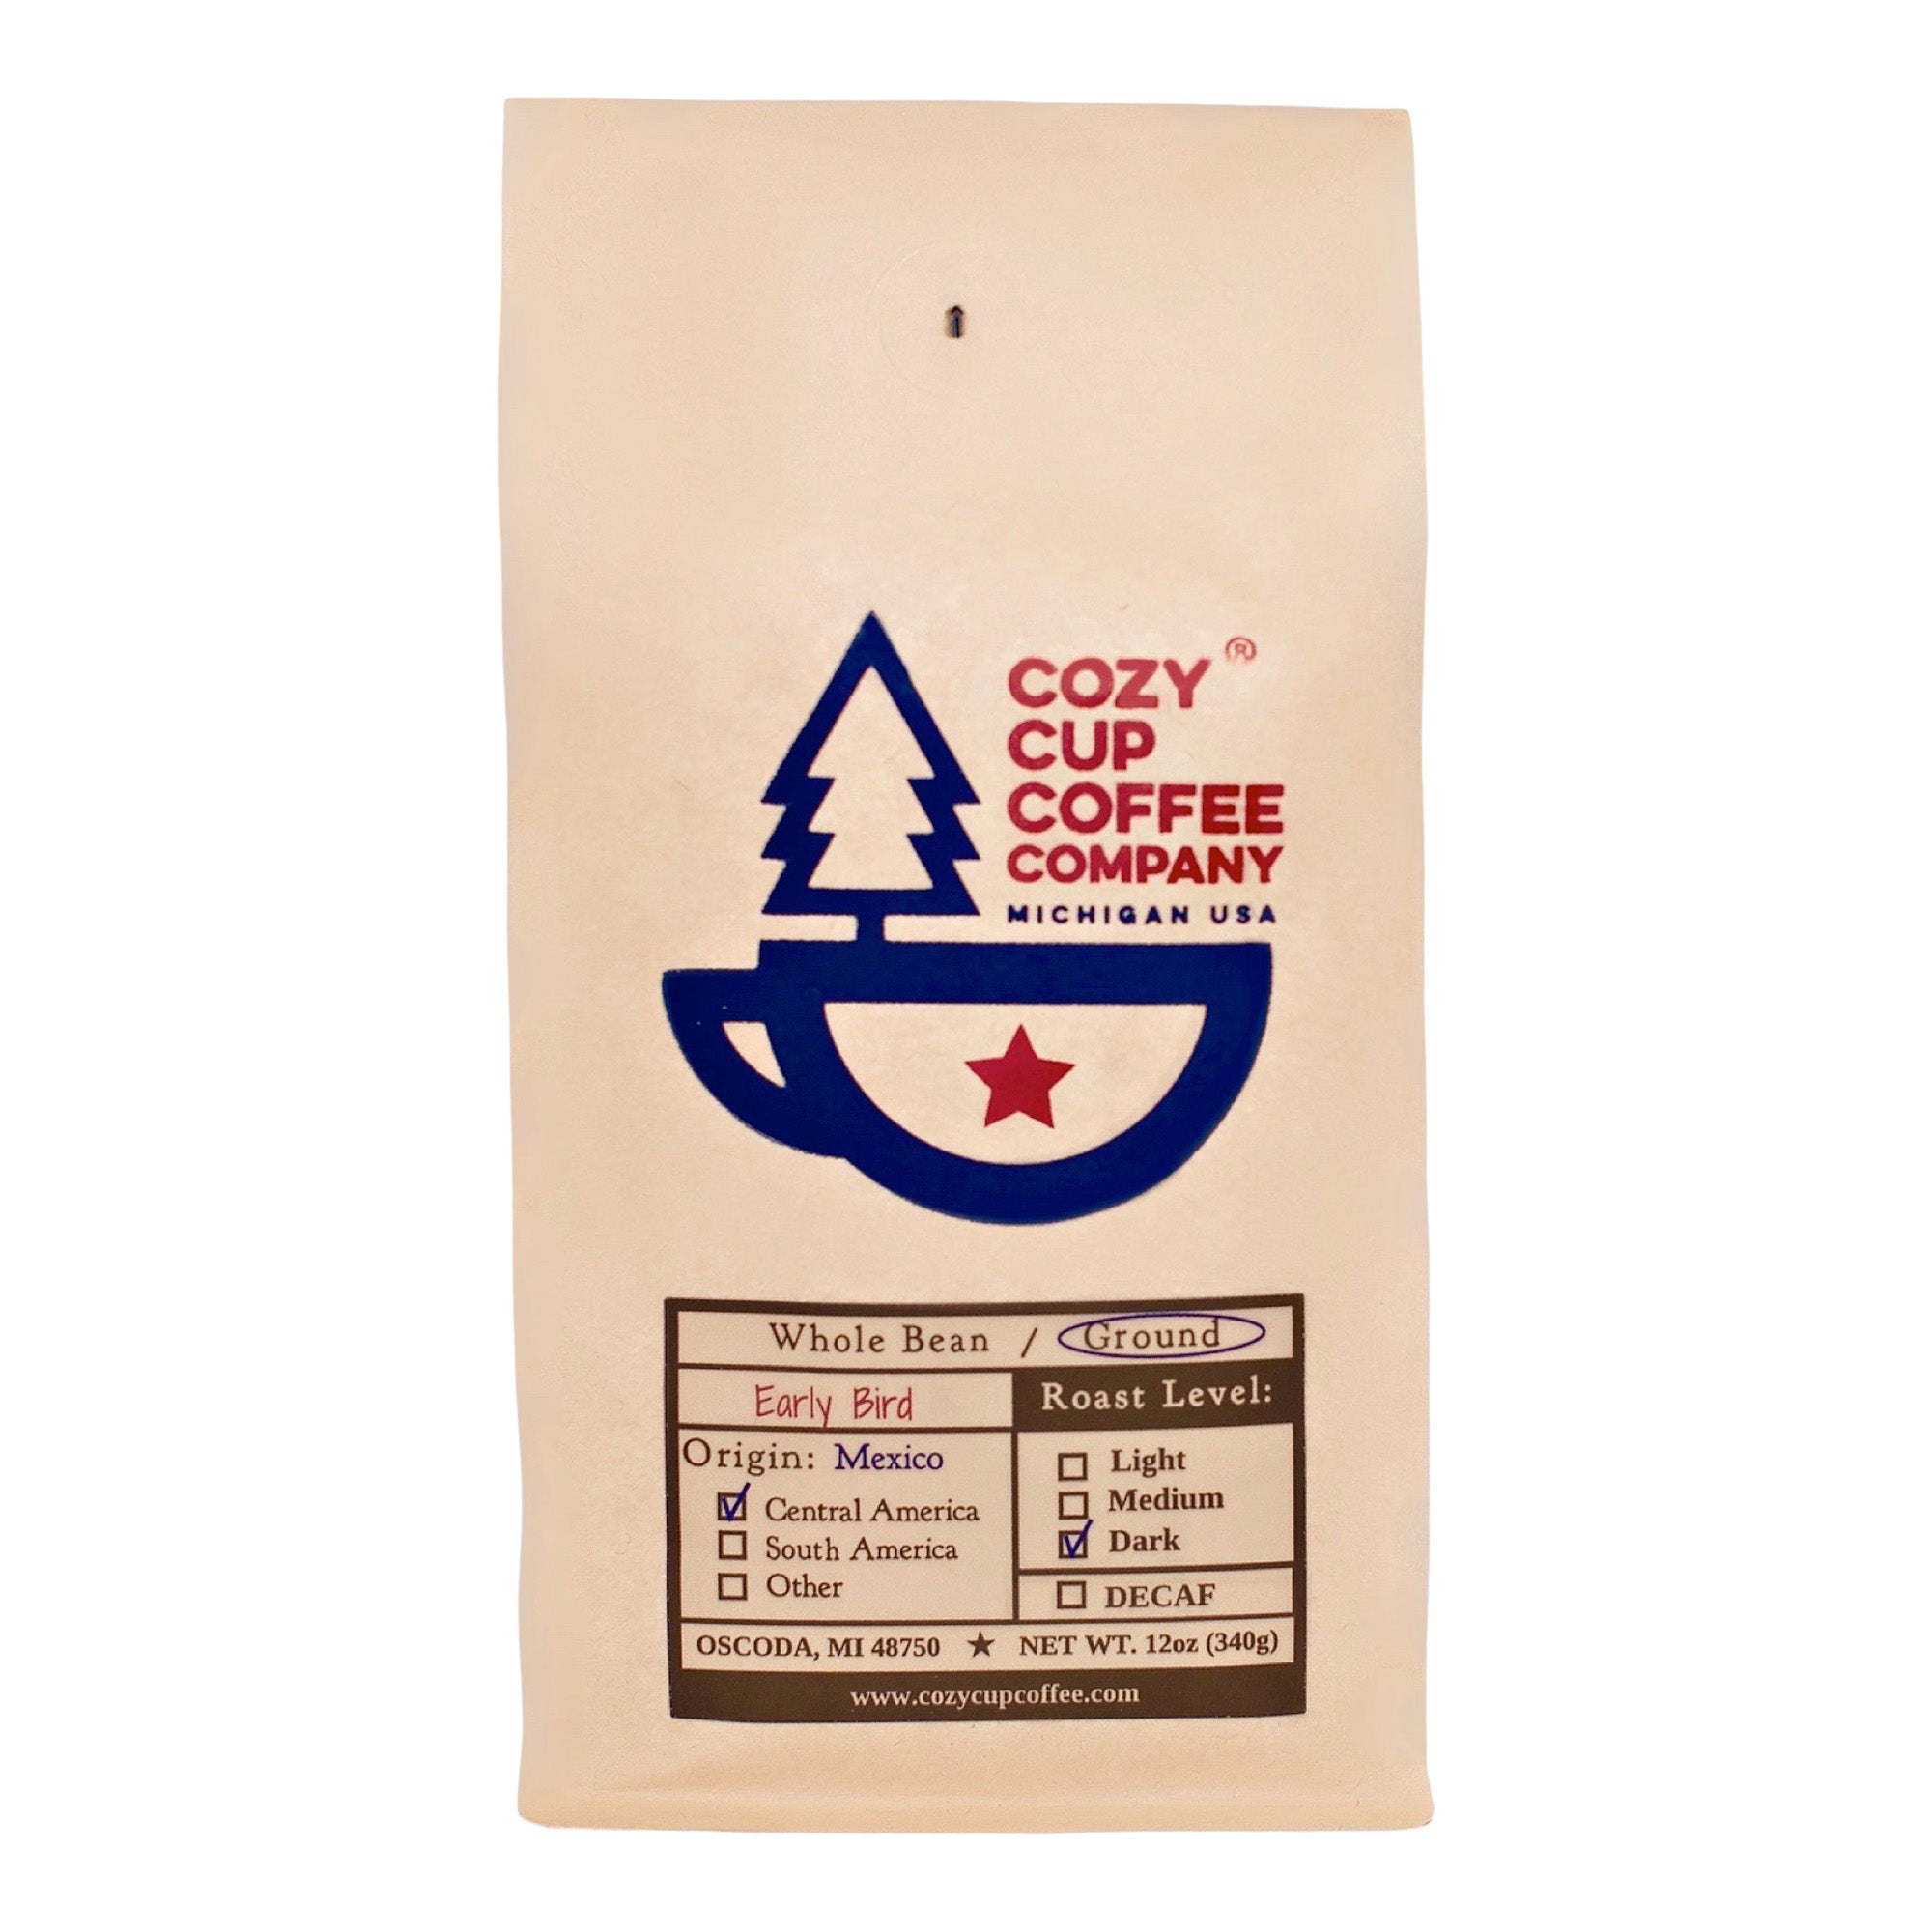 Early Bird Coffee | Early Bird Coffee Blend | Cozy Cup Coffee Company